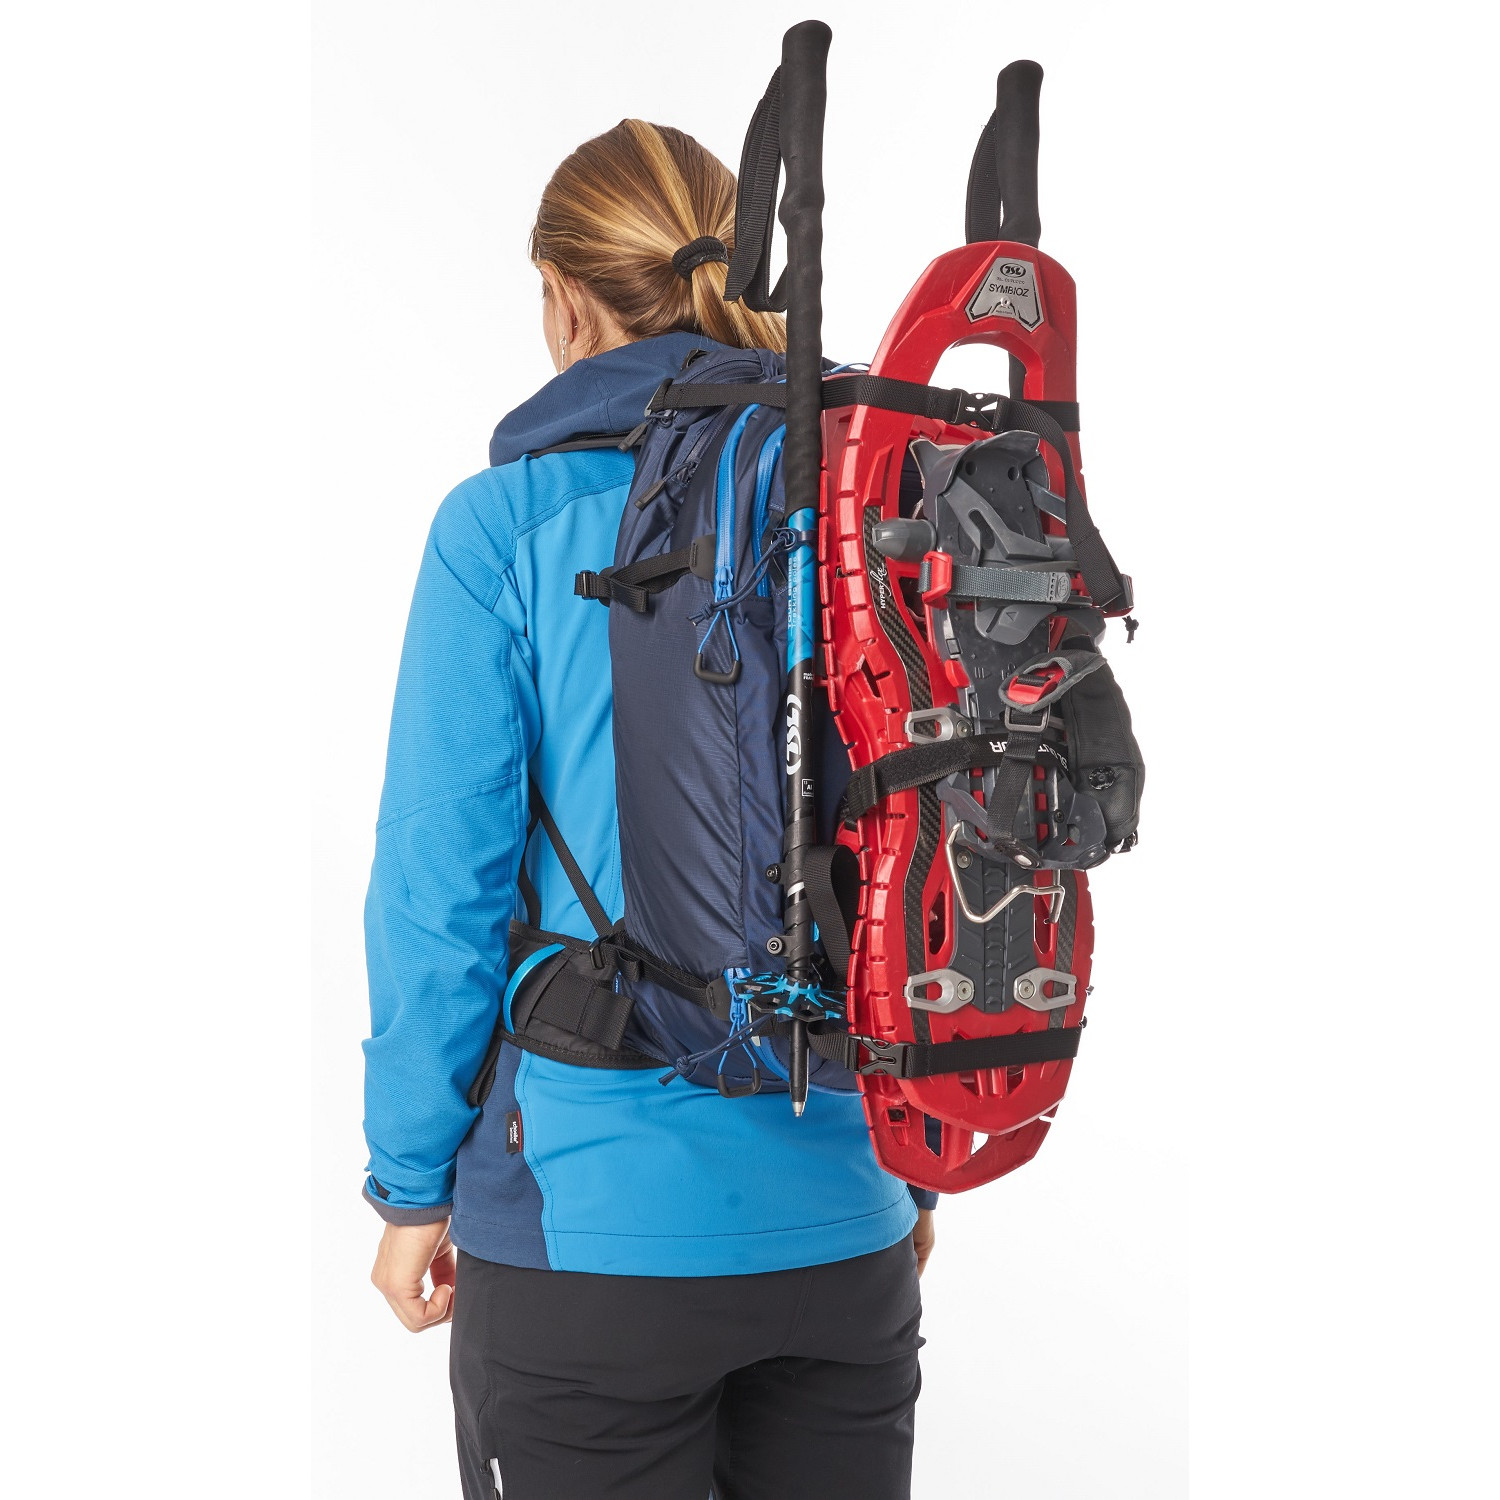 Ortovox Ascent 30S Ski/Snowboard Backpack